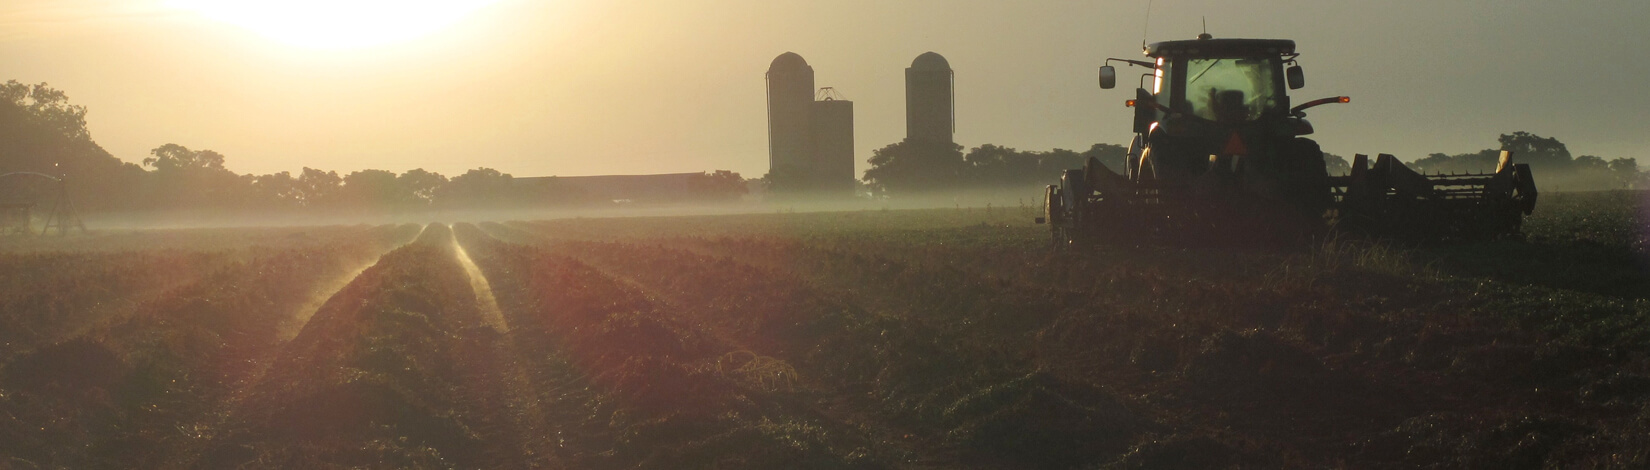 Tractor on a farm in morning fog